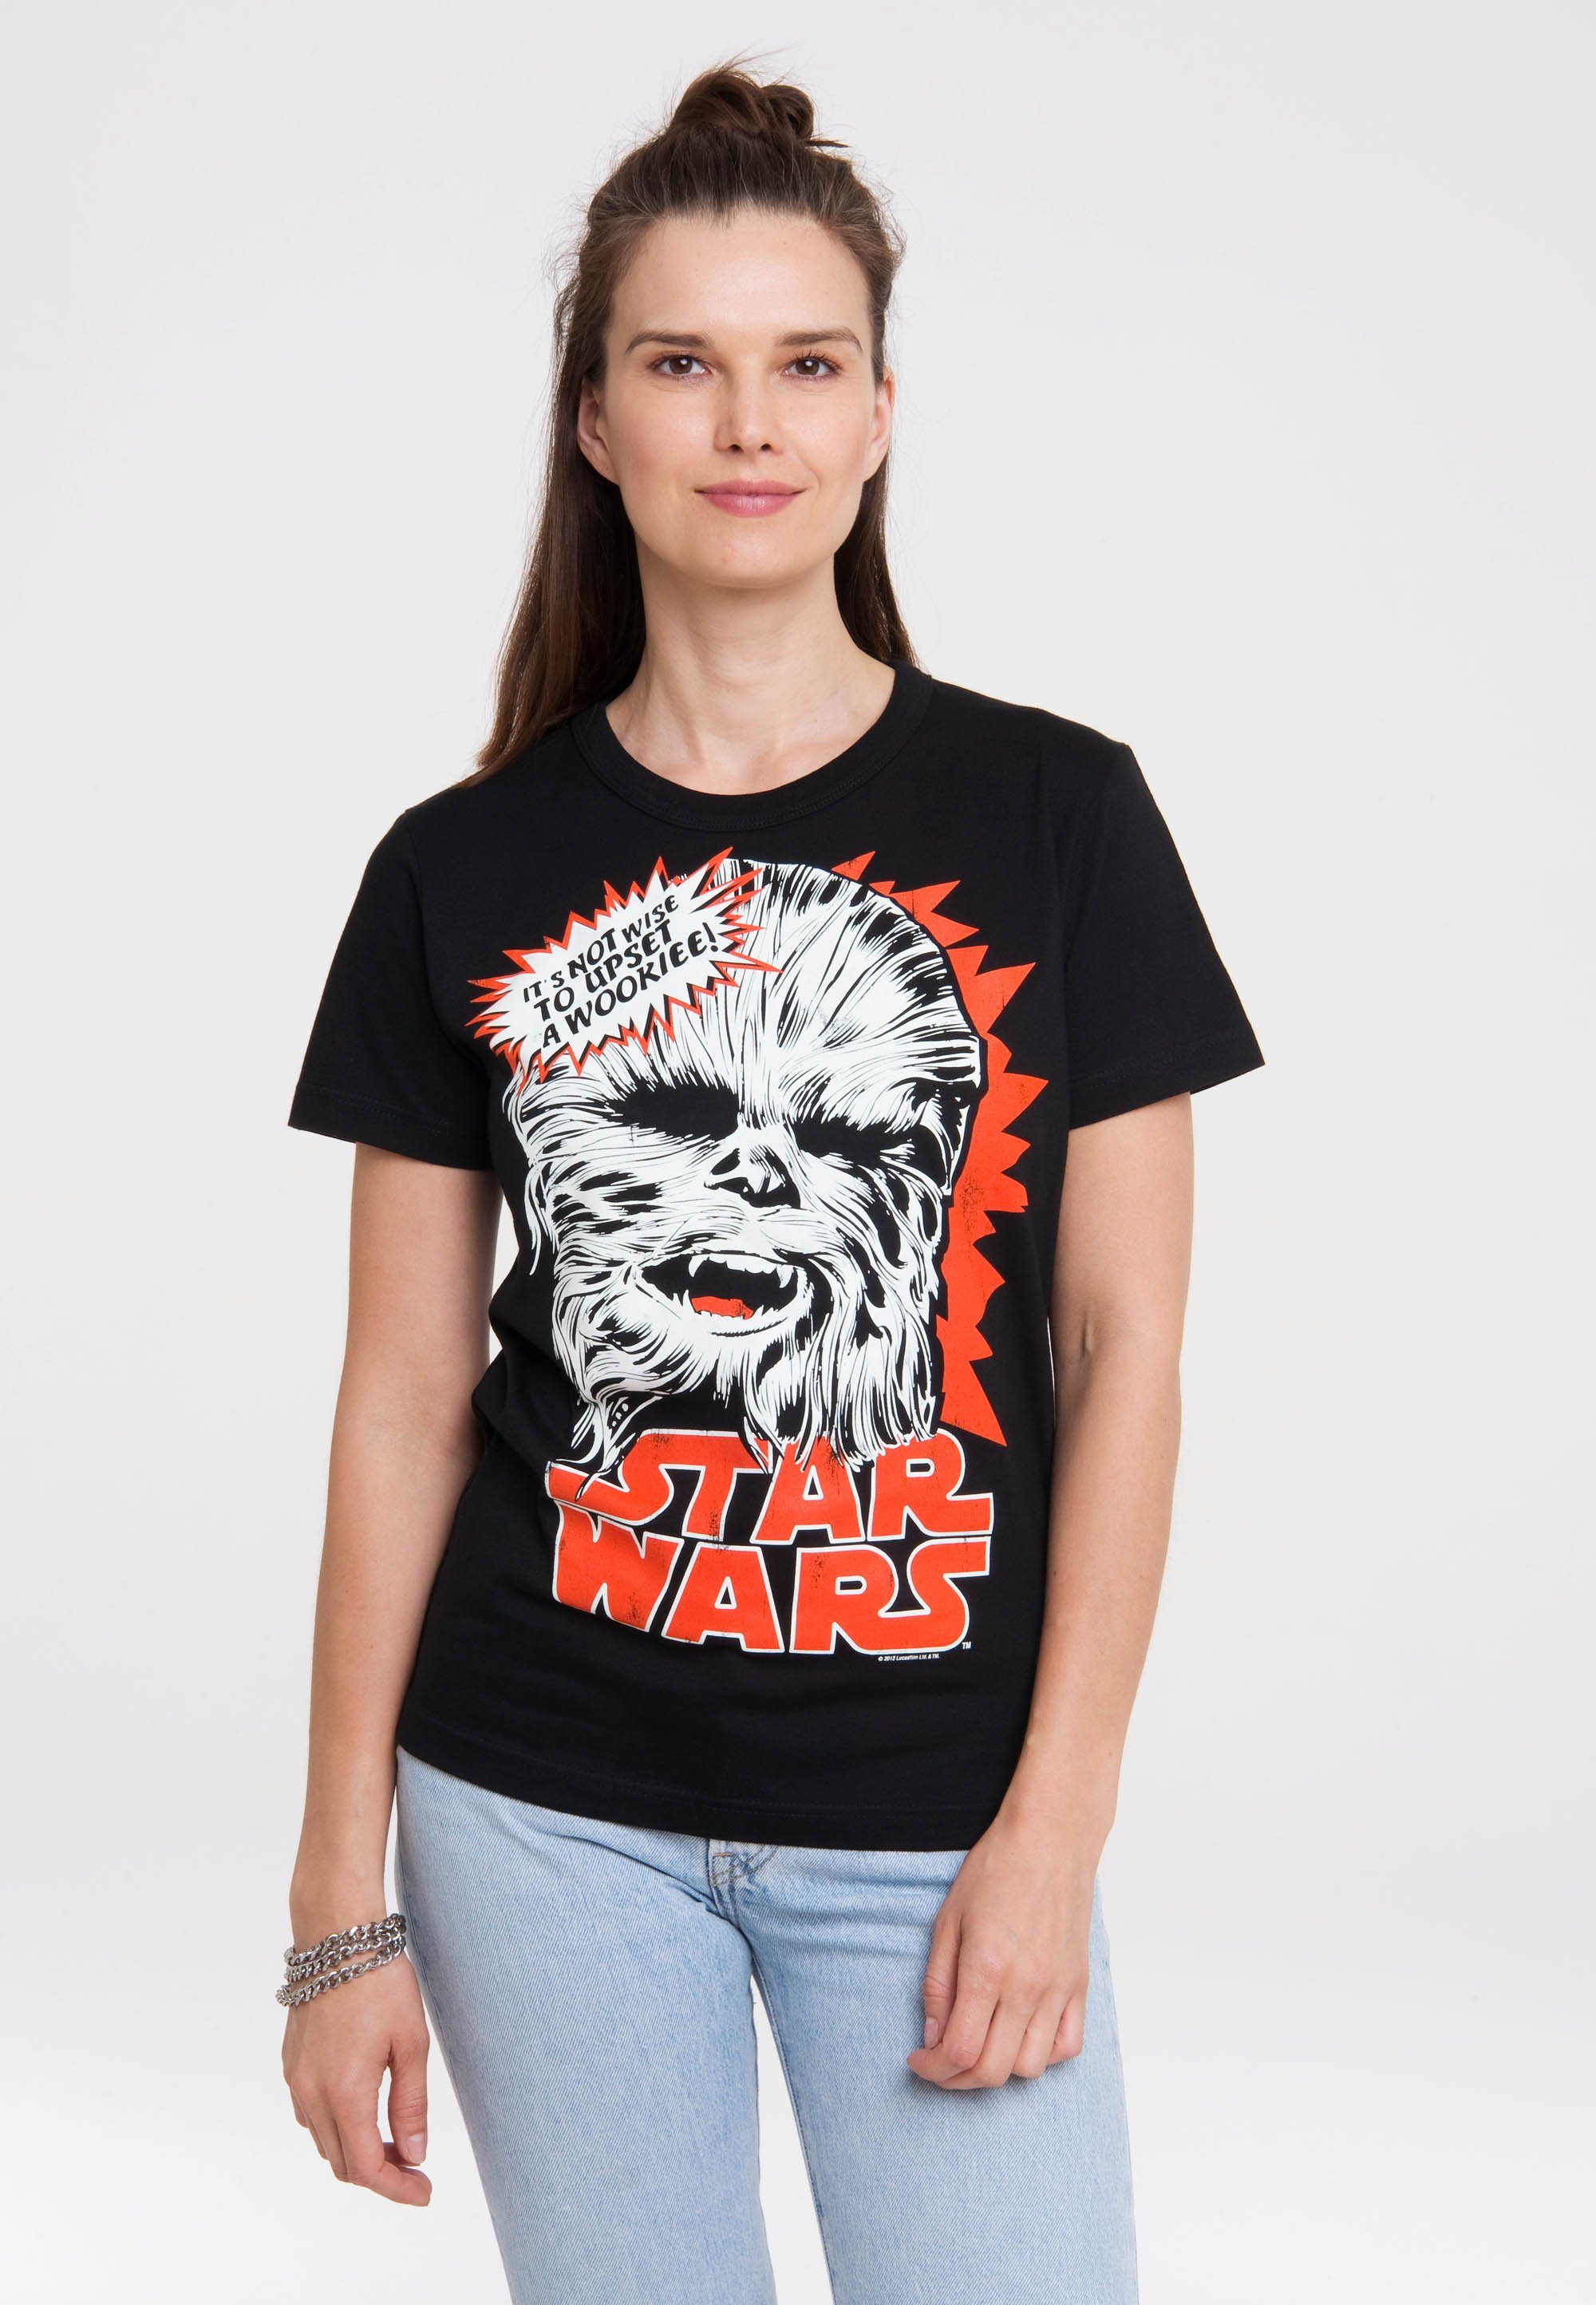 Star Print Wars LOGOSHIRT lizenziertem T-Shirt Chewbacca mit -